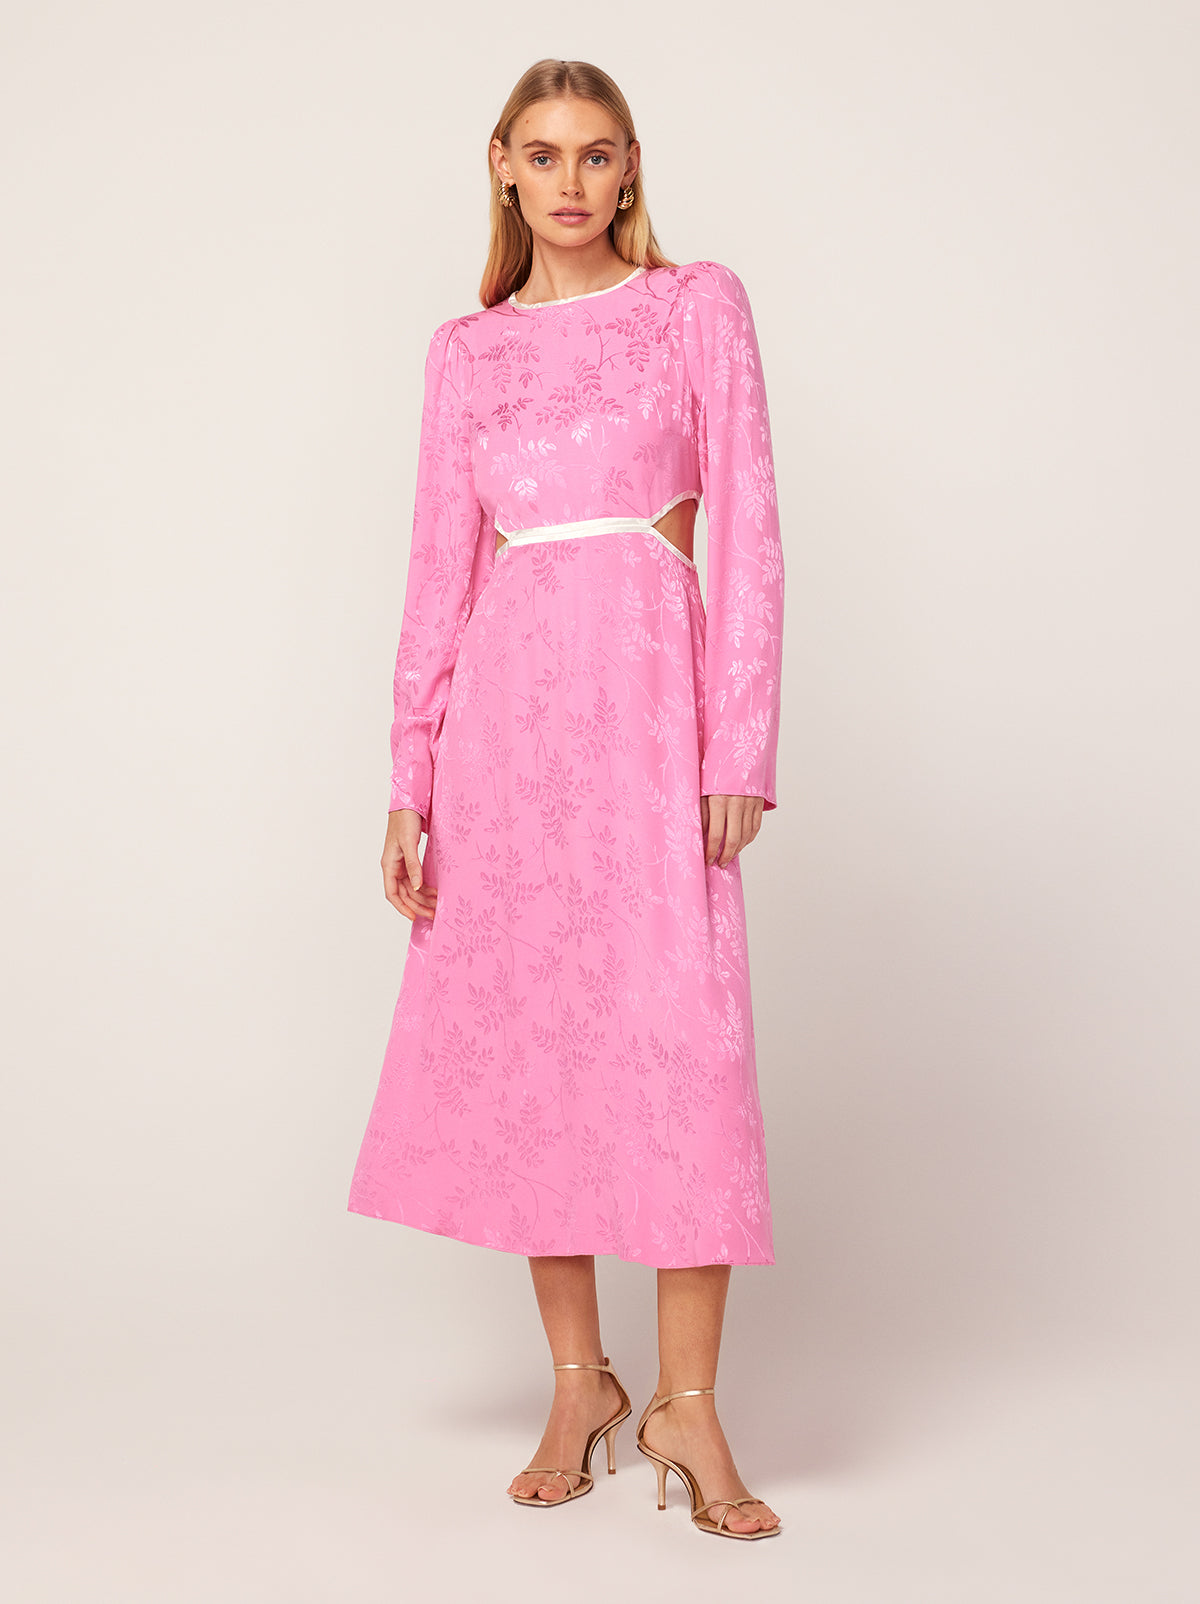 Blythe Pink Floral Jacquard Dress